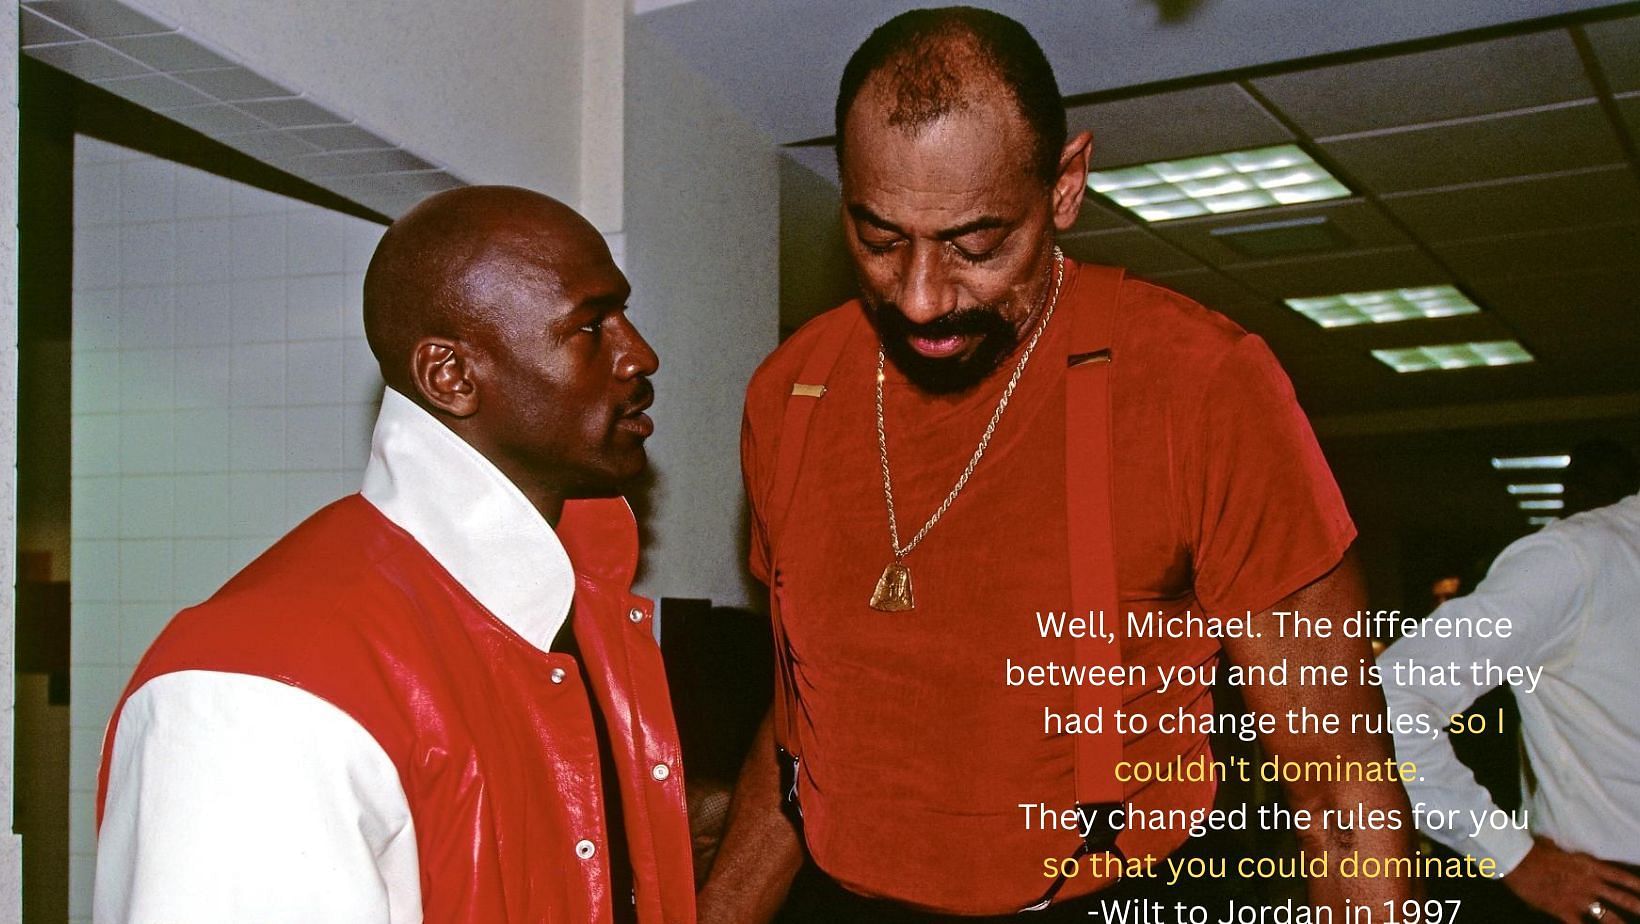 Wilt Chamberlain put himself over Michael Jordan in the GOAT conversation.